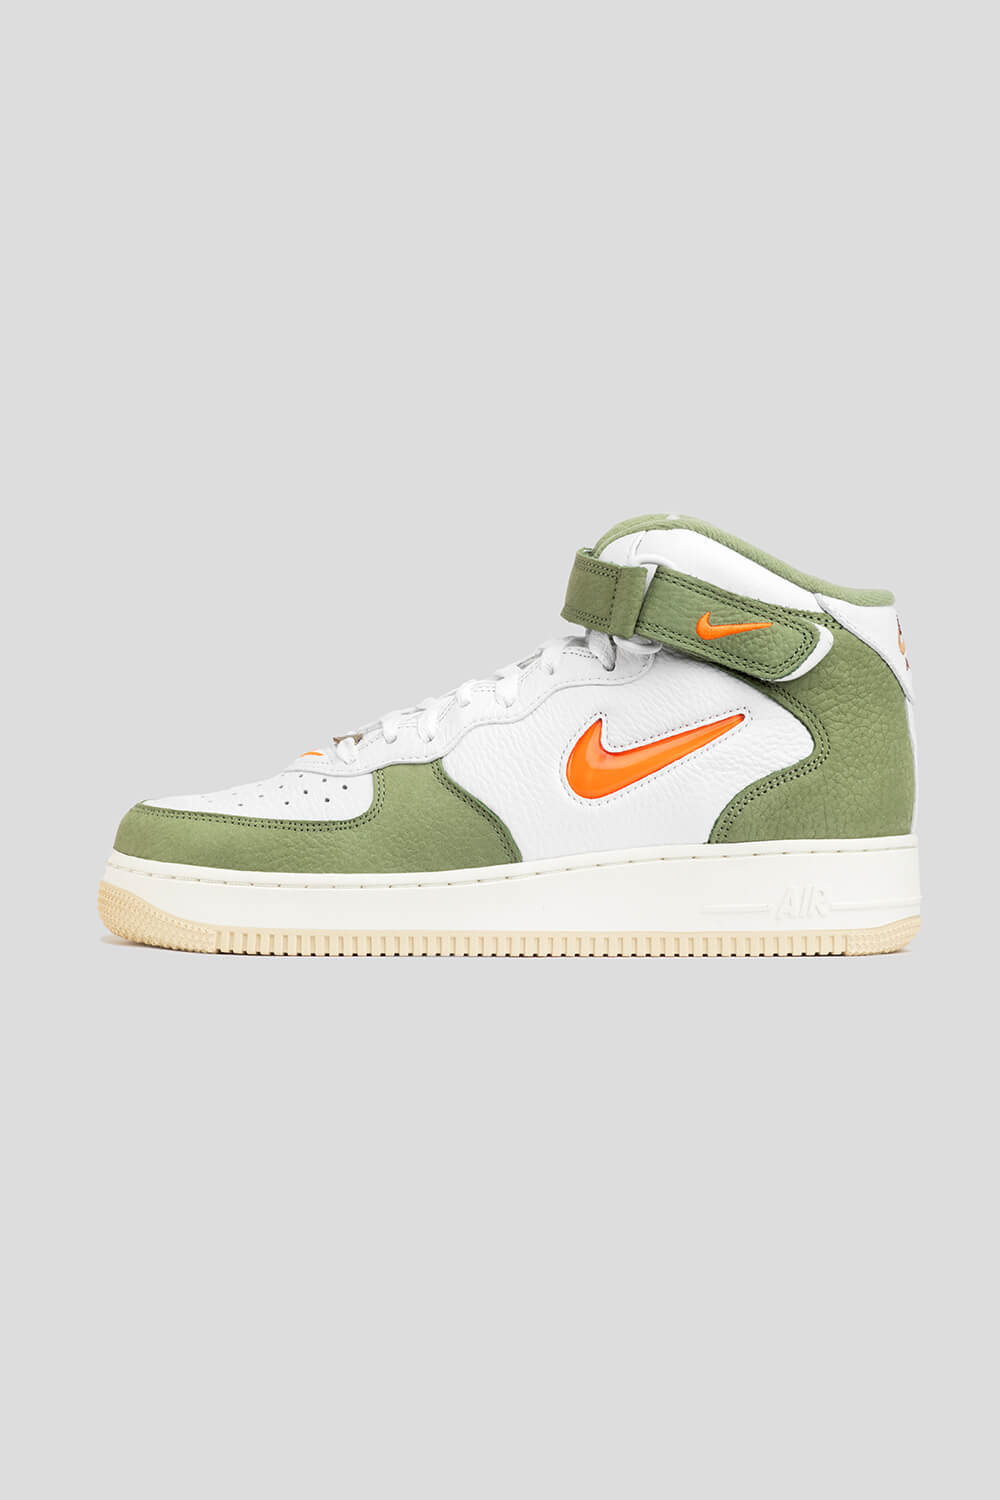 Nike Air Force 1 Mid '07 Men's Shoes Olive Green-Total Orange